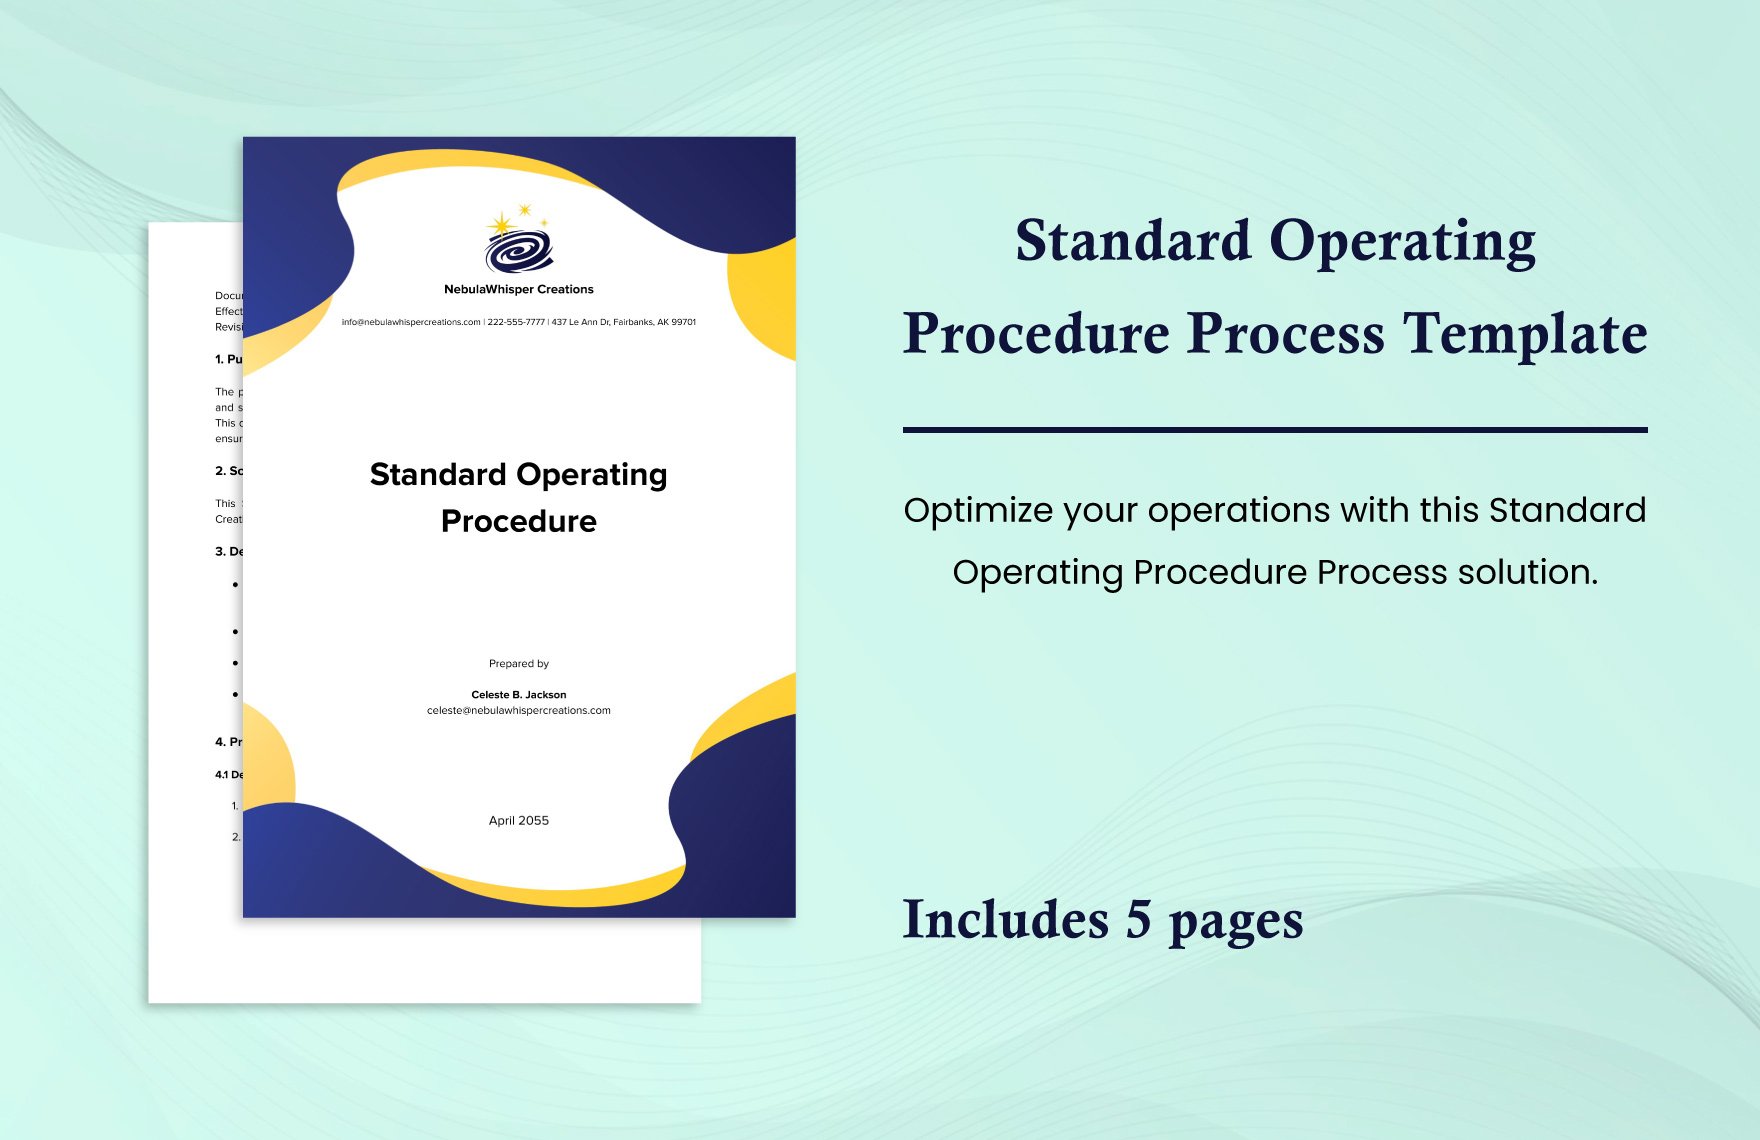 Standard Operating Procedure Process Template